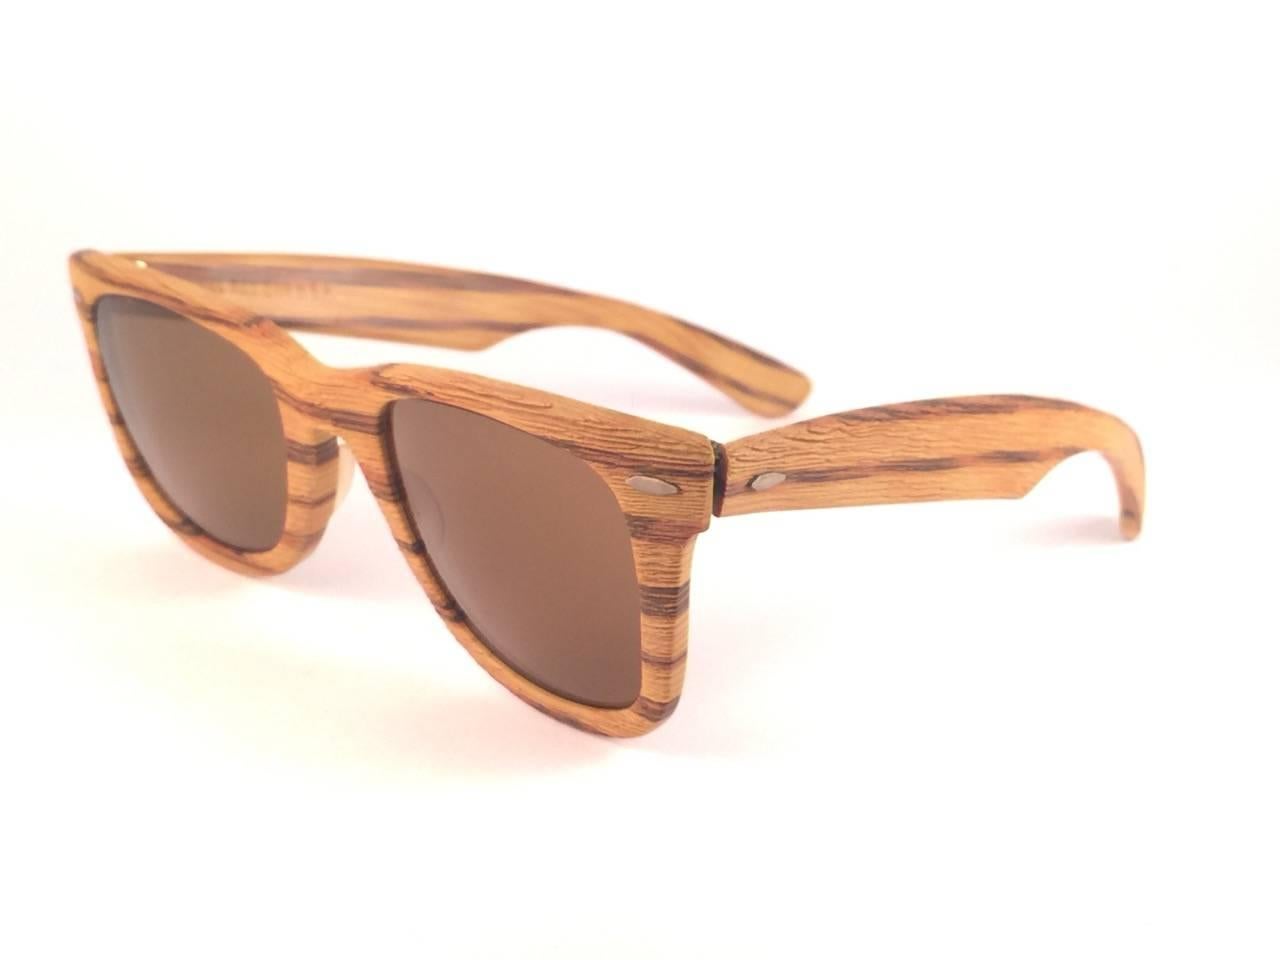 Marron Nouveau Ray Ban The Wayfarer Woodies Teak Edition Collectors USA 80's Sunglasses